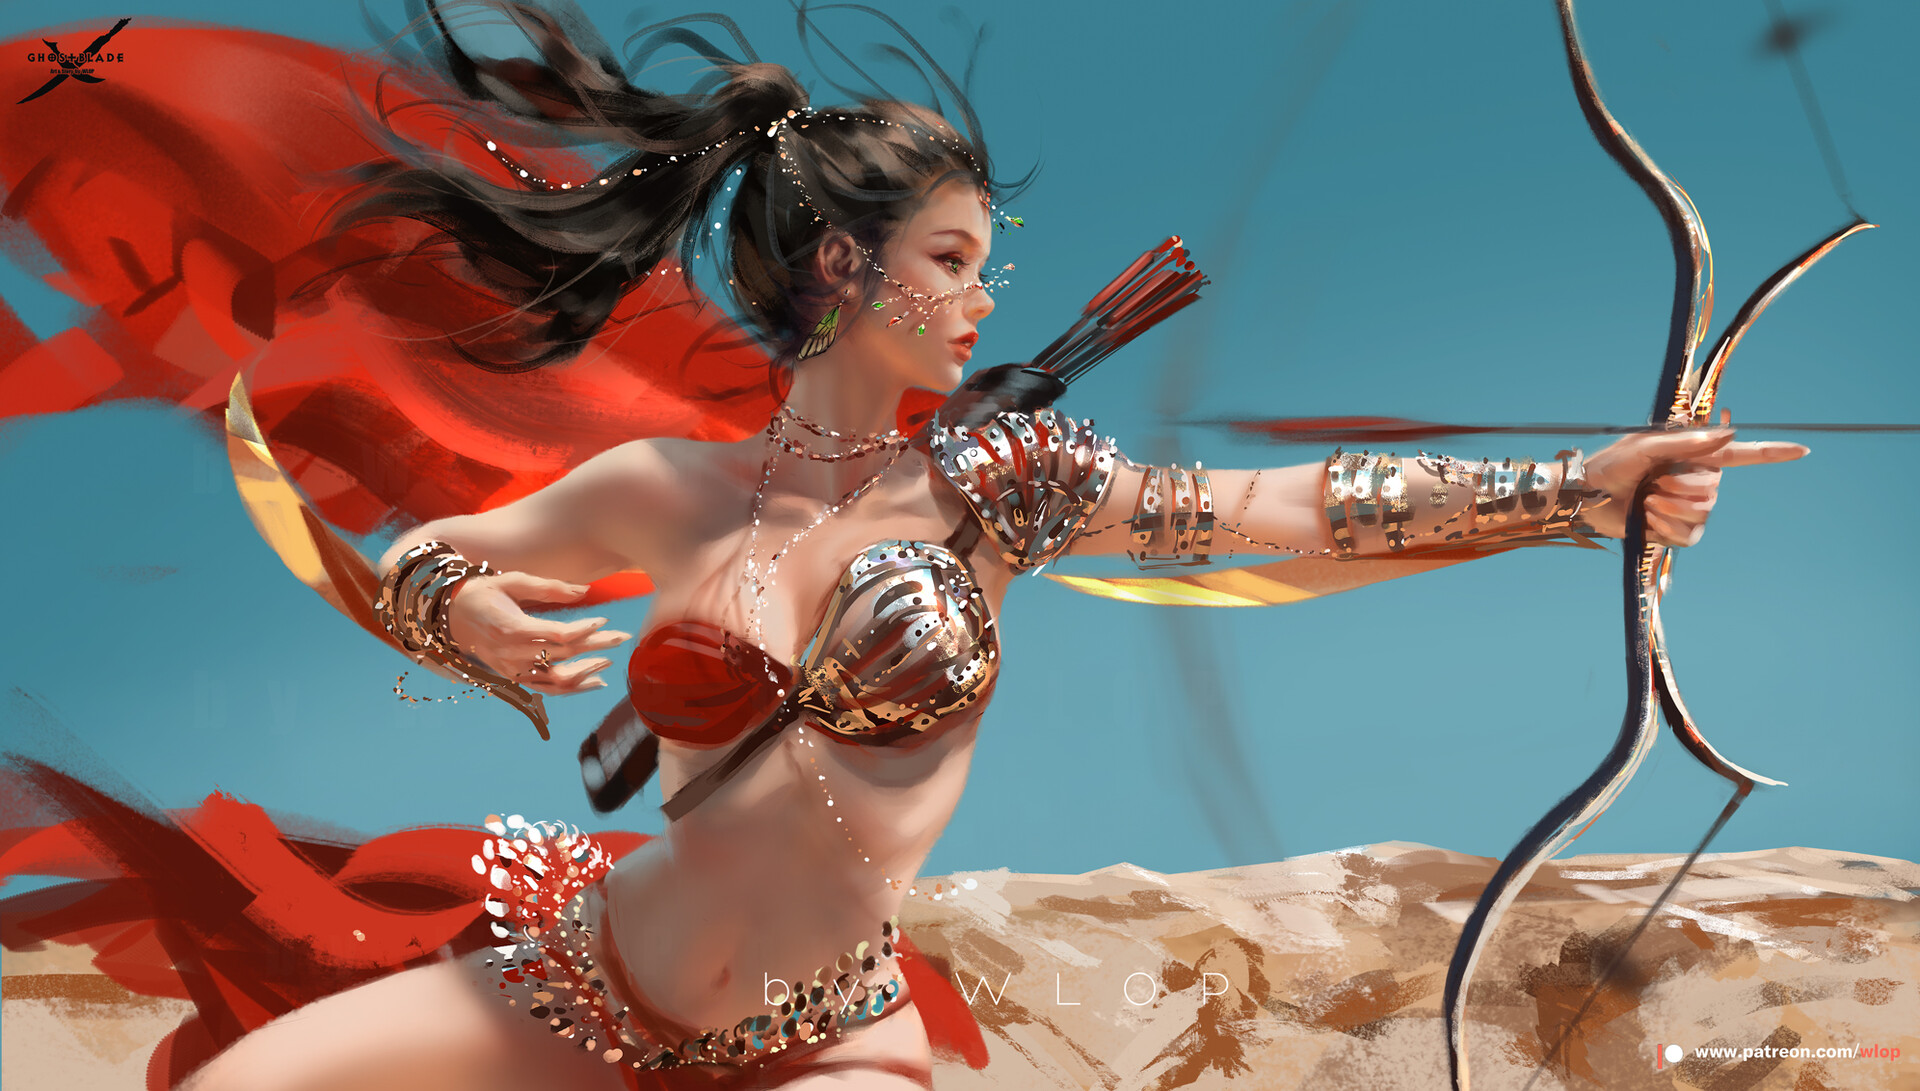 General 1920x1091 WLOP digital art digital painting artwork red clothing women archer arrows bikini armor bow ponytail Ghostblade Fengye